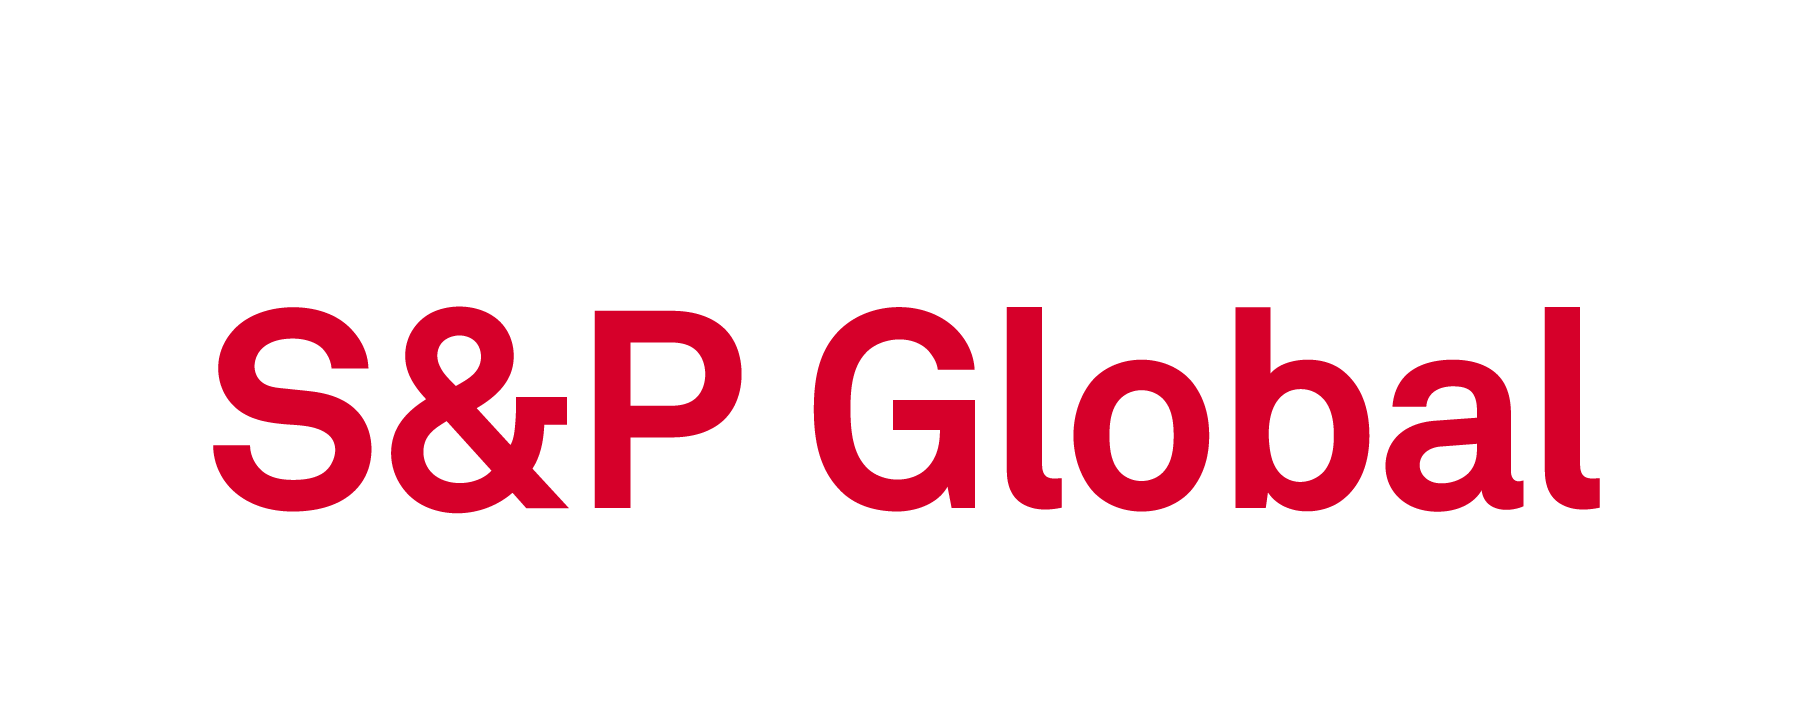 S p россии. S&P Global. S&P Global ratings. . S & P Global лого. S P Global Platts лого.